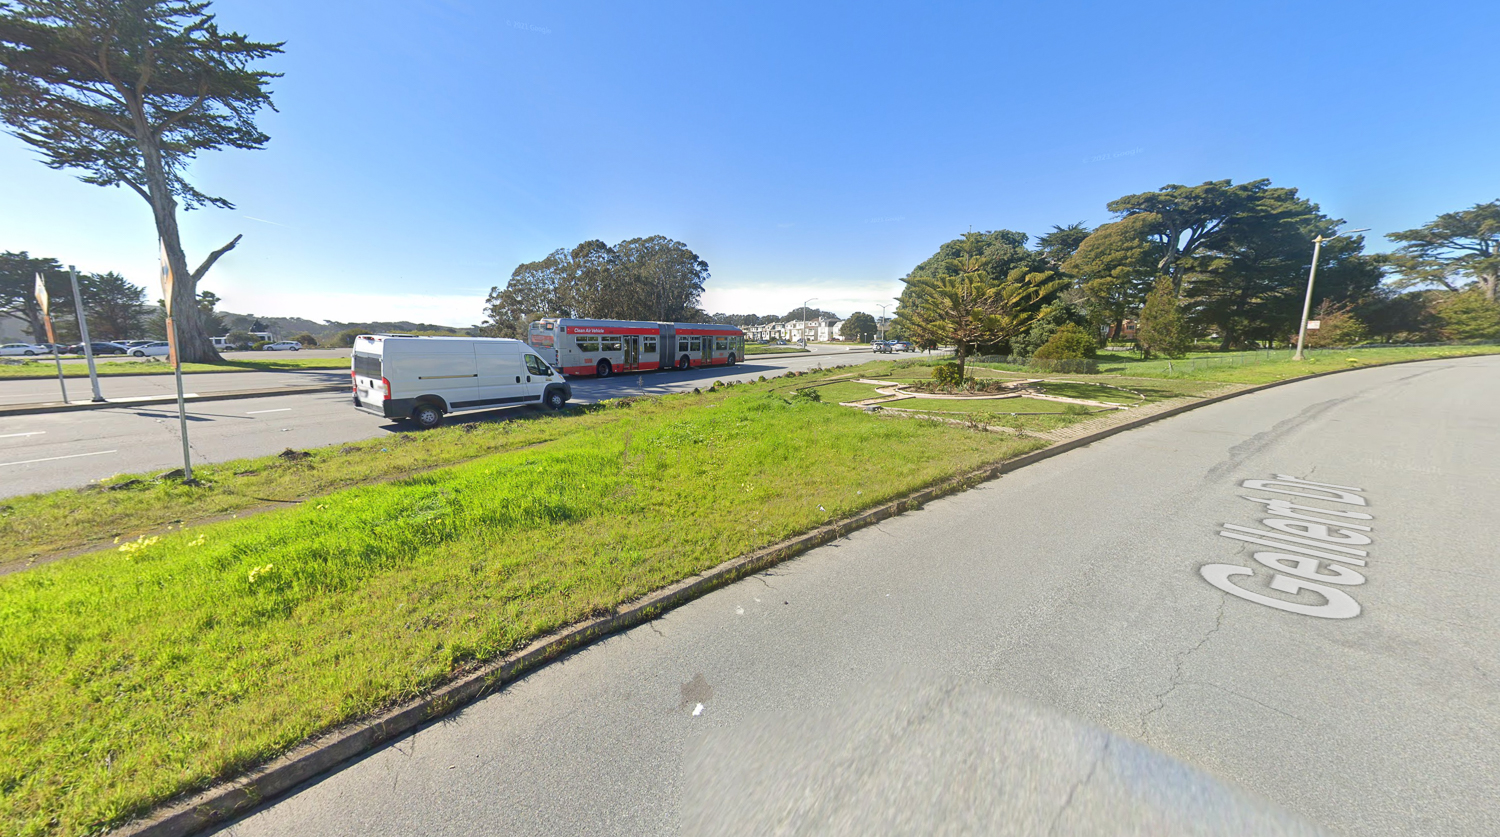 201 Gellert Drive, image via Google Street View